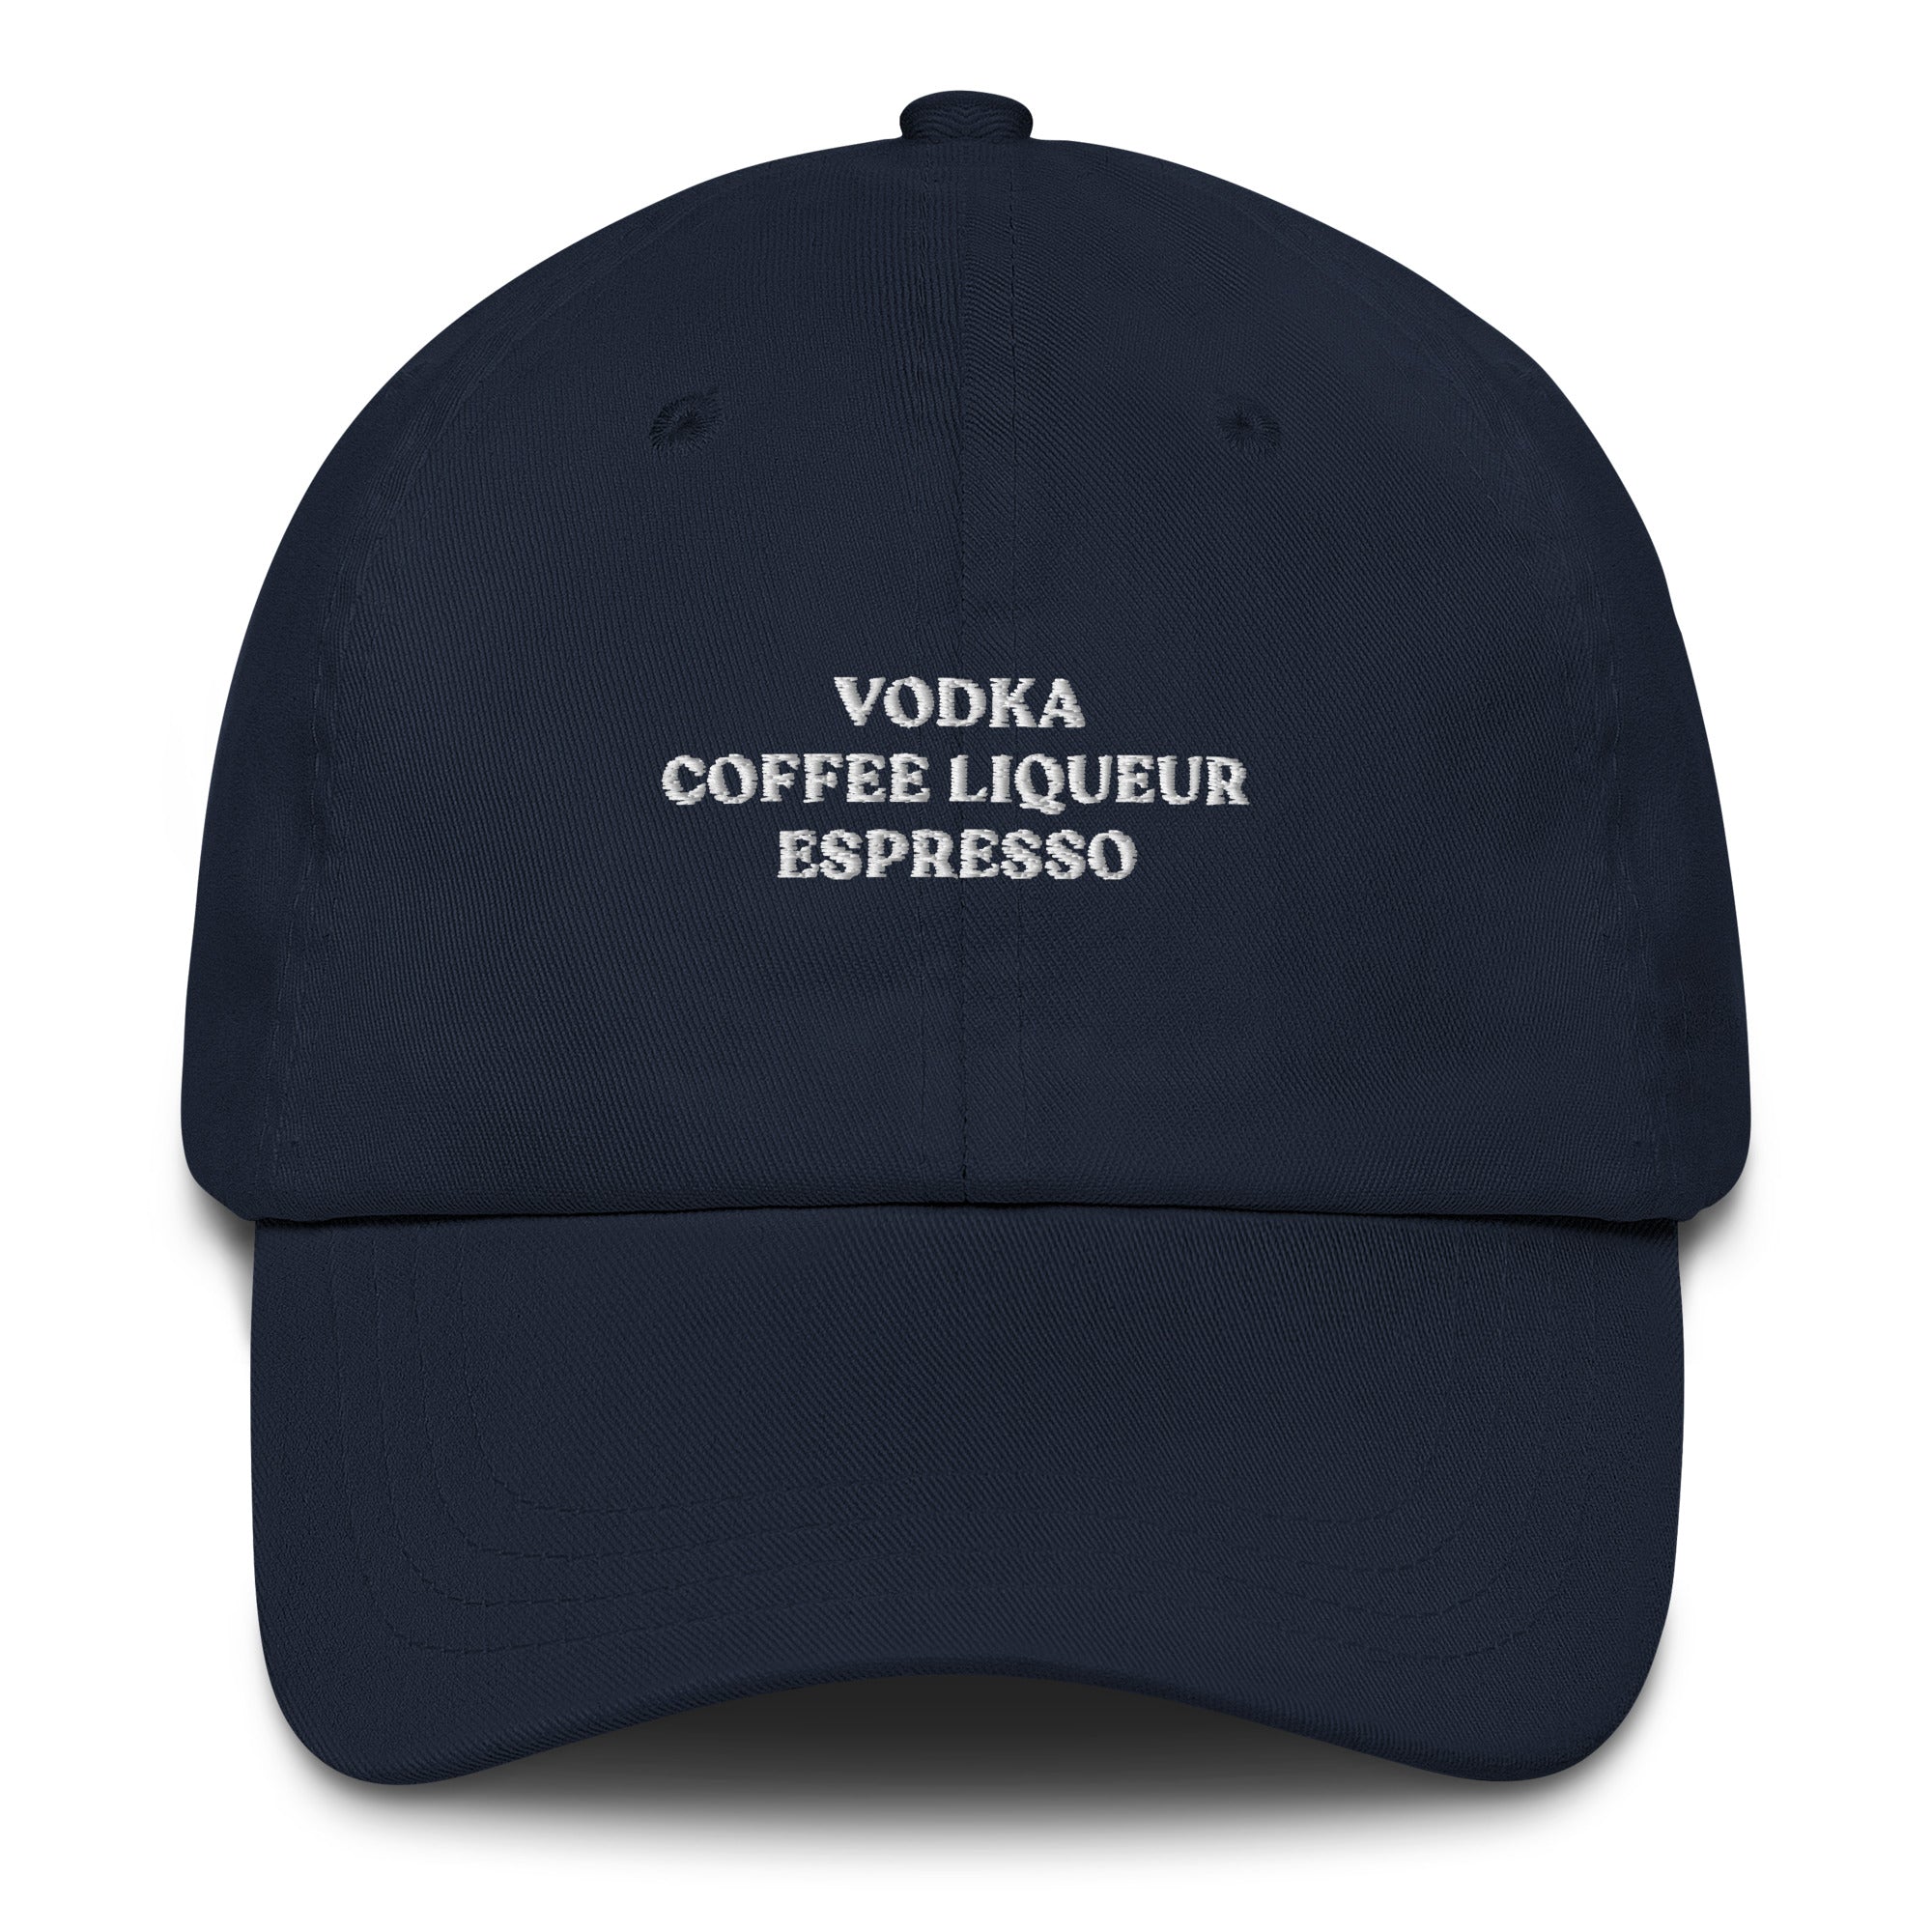 Vodka Coffee Liqueur Espresso - Cap